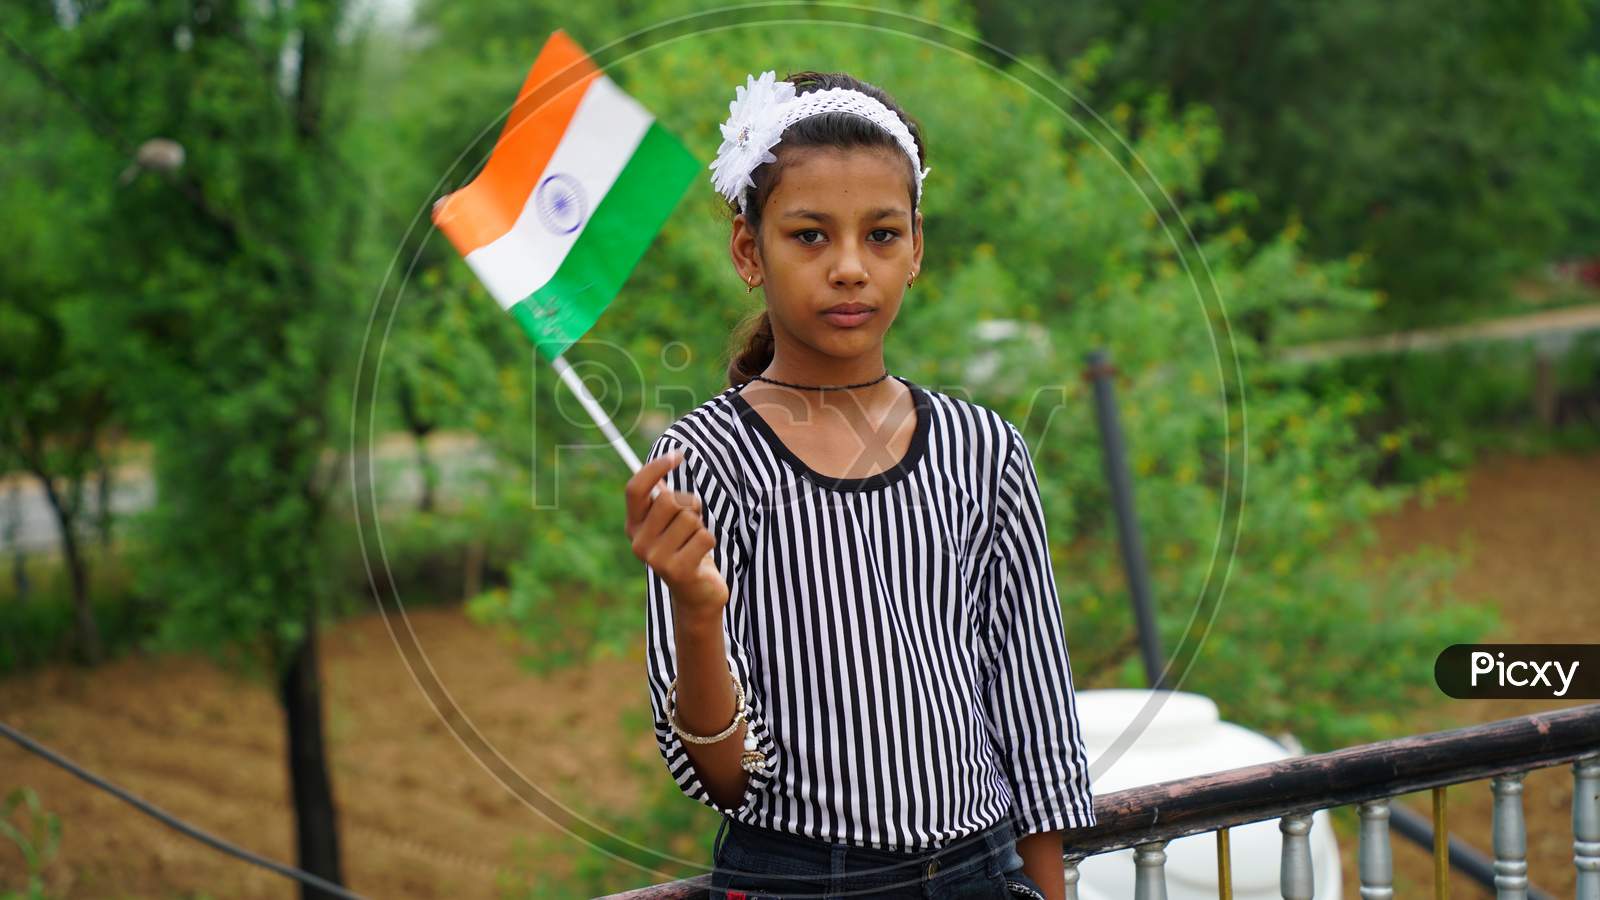 20 September 2020 : Reengus, Jaipur, India / Cute Little Girl With Indian National Tricolour Flag